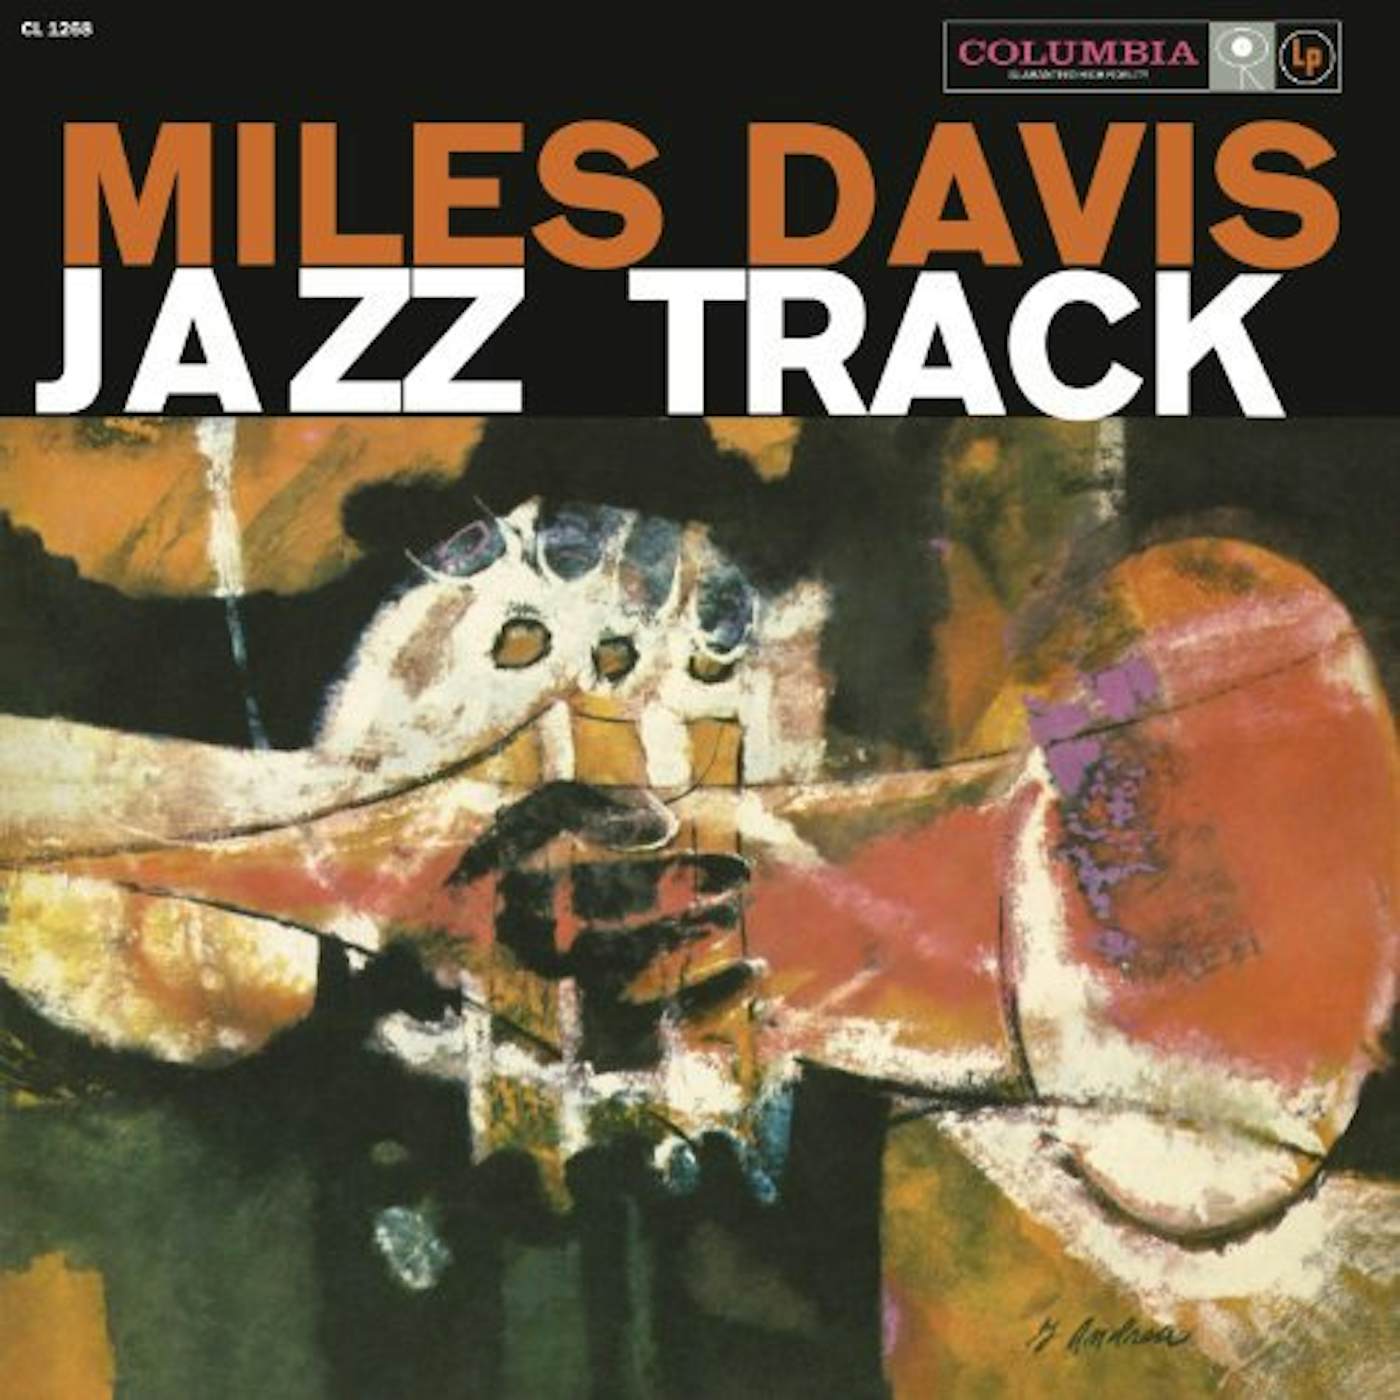 Miles Davis Jazz Track Vinyl Record